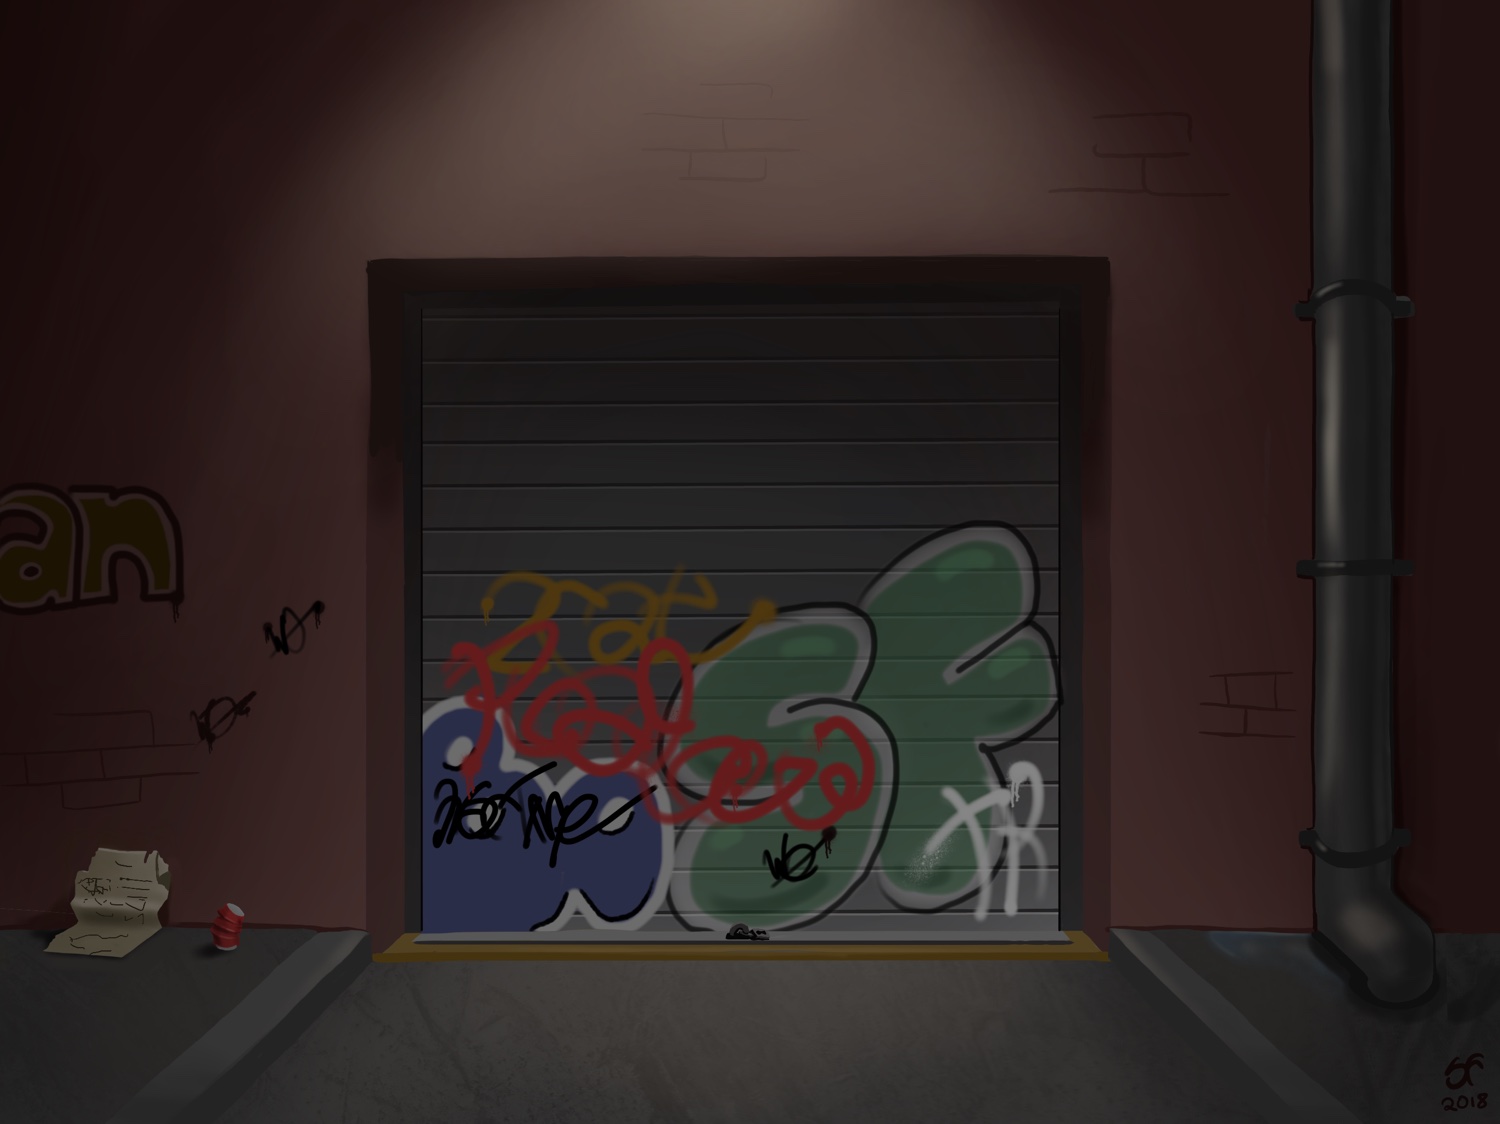 Alley Background